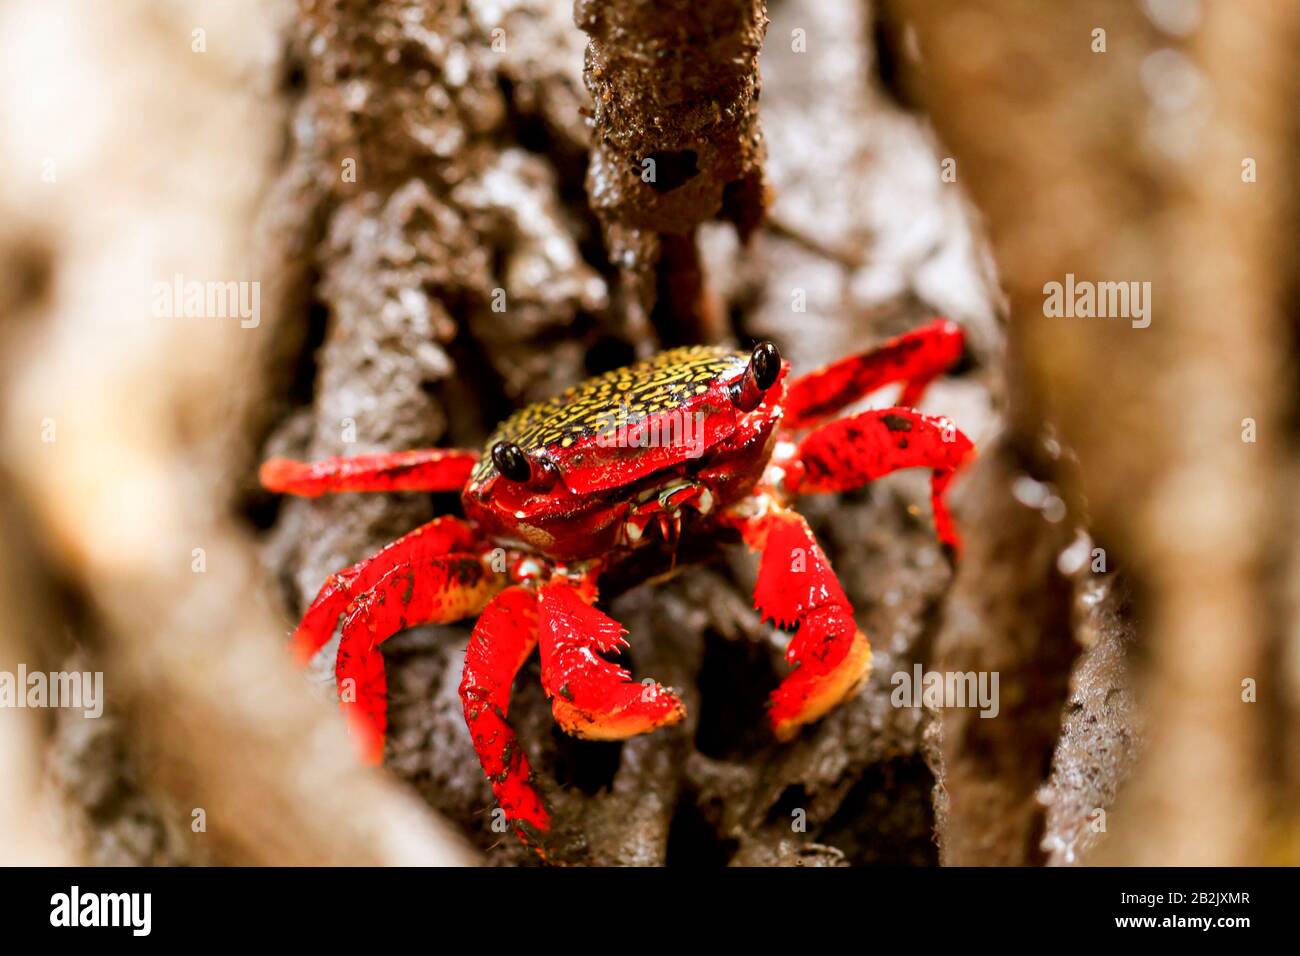 Mangrove Root Crab In His Natural Environment Stock Photo